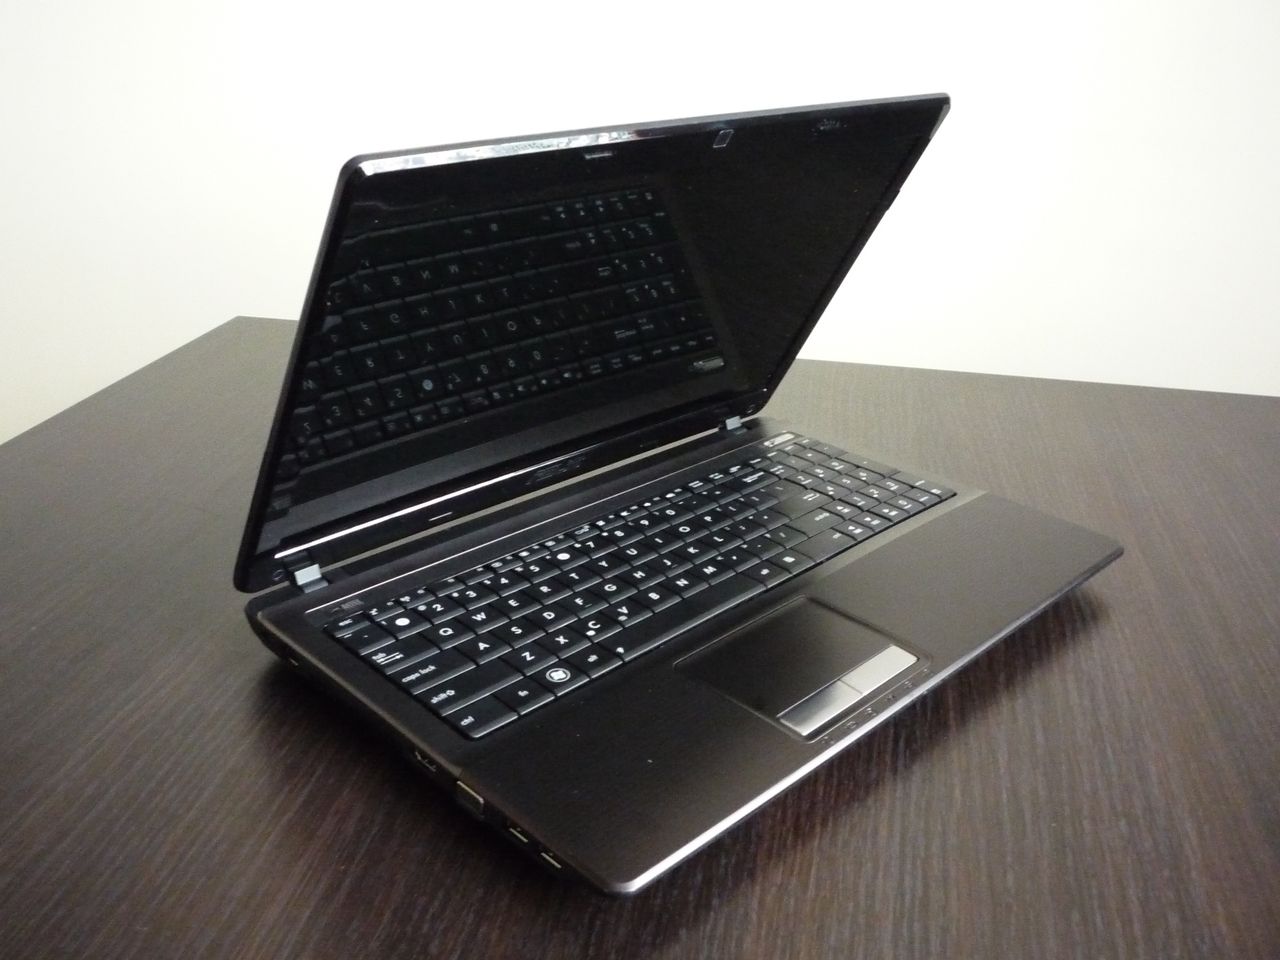 Asus K53BY - testujemy laptop za 1500 zł [część 2]